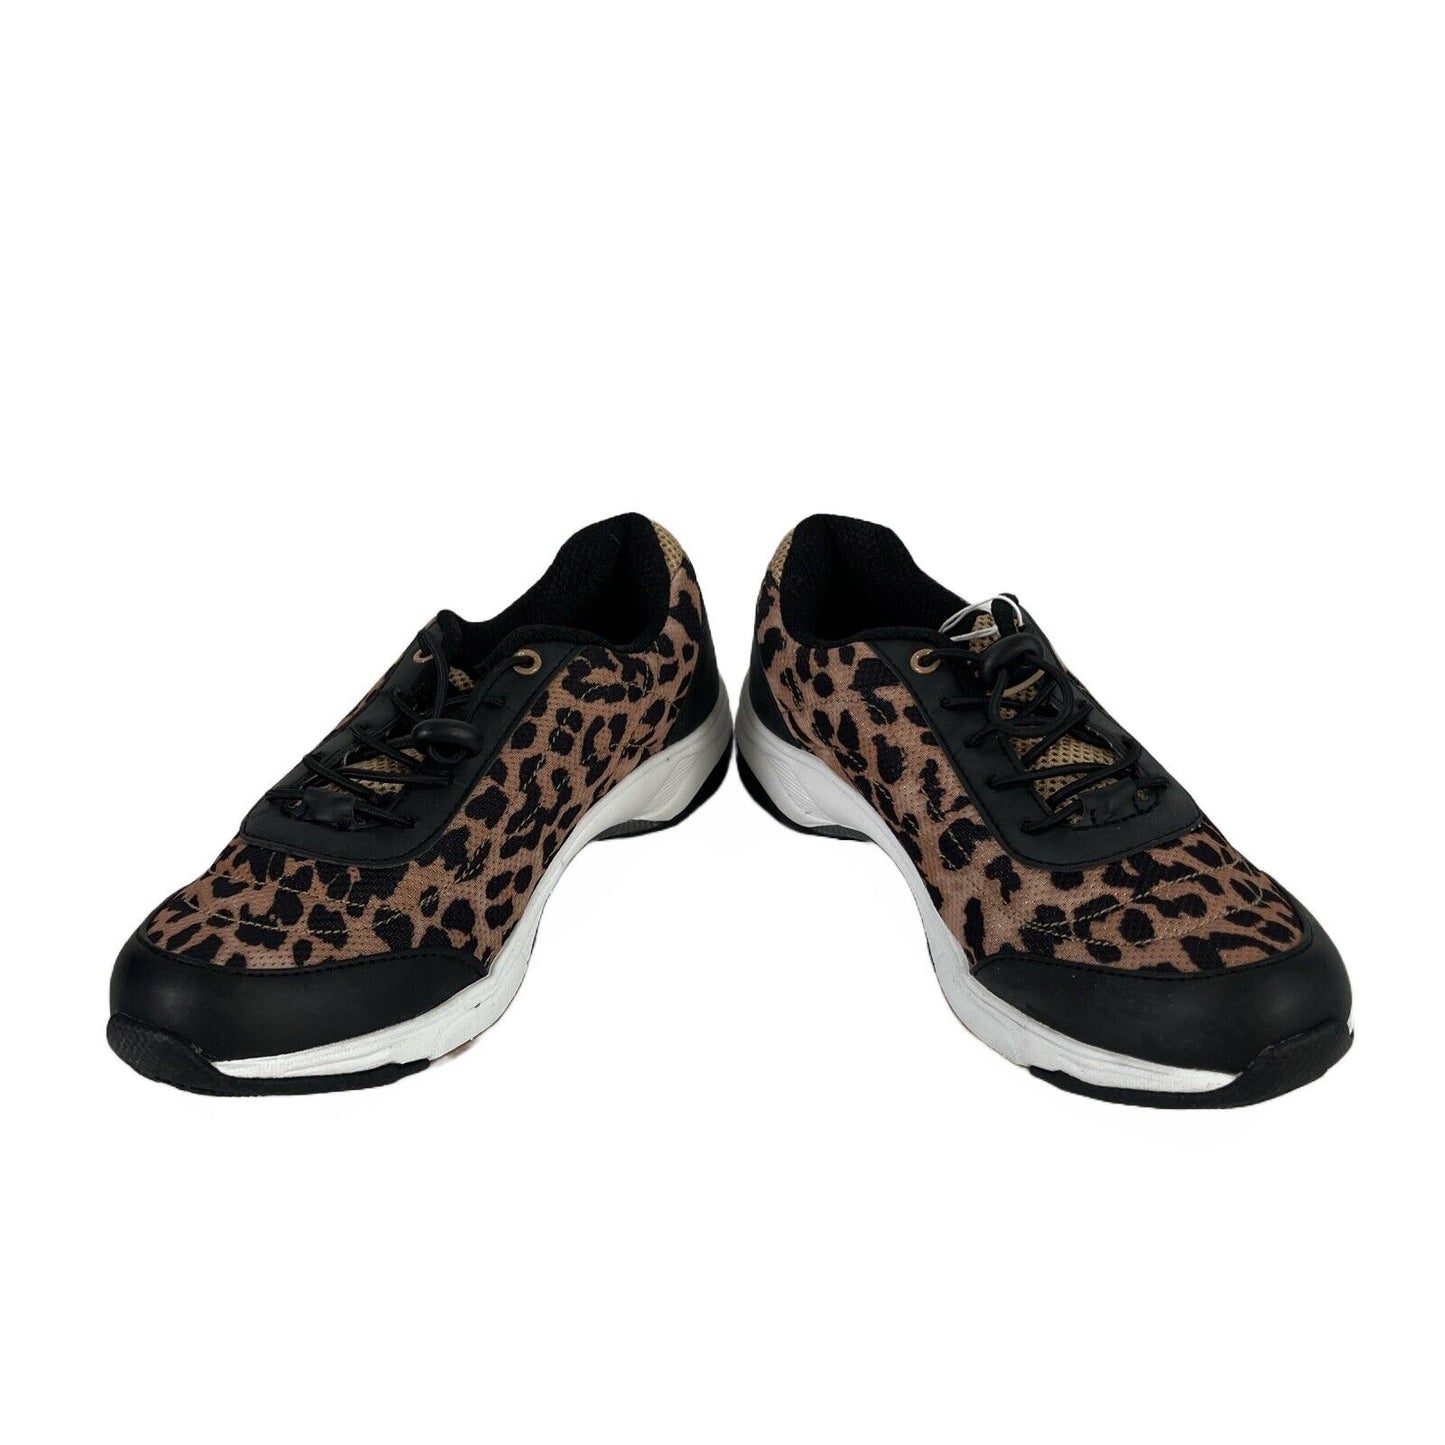 NEW Vionic Women's Brown/Black Leopard 335 Neptune Athletic Sneakers - 6